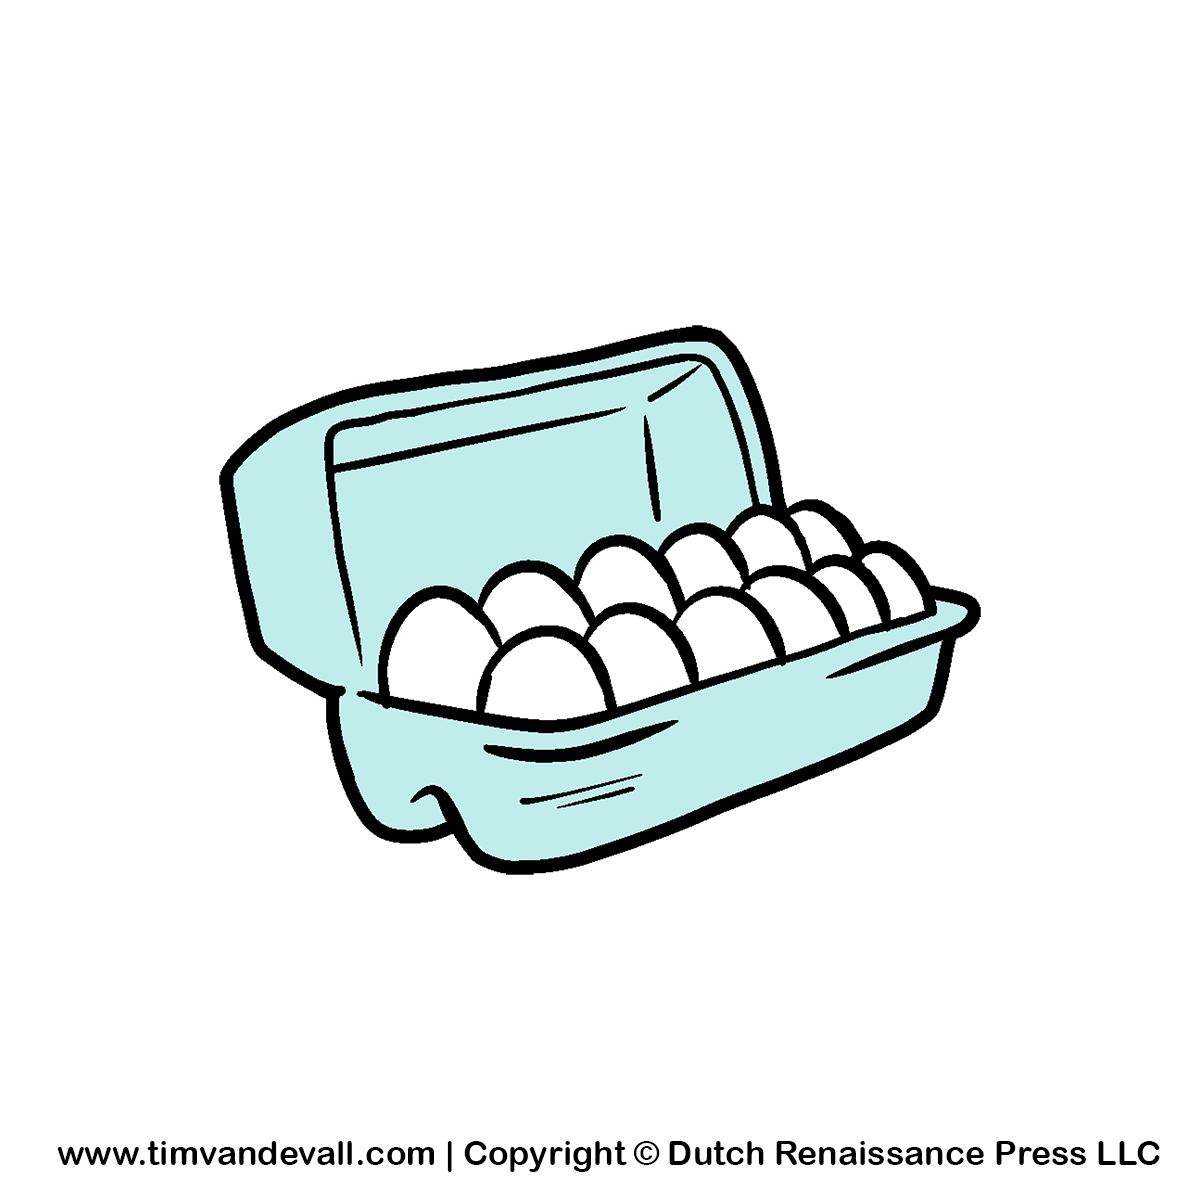 Dozen Eggs Png Dozen Of Eggs Png - Clip Art Library